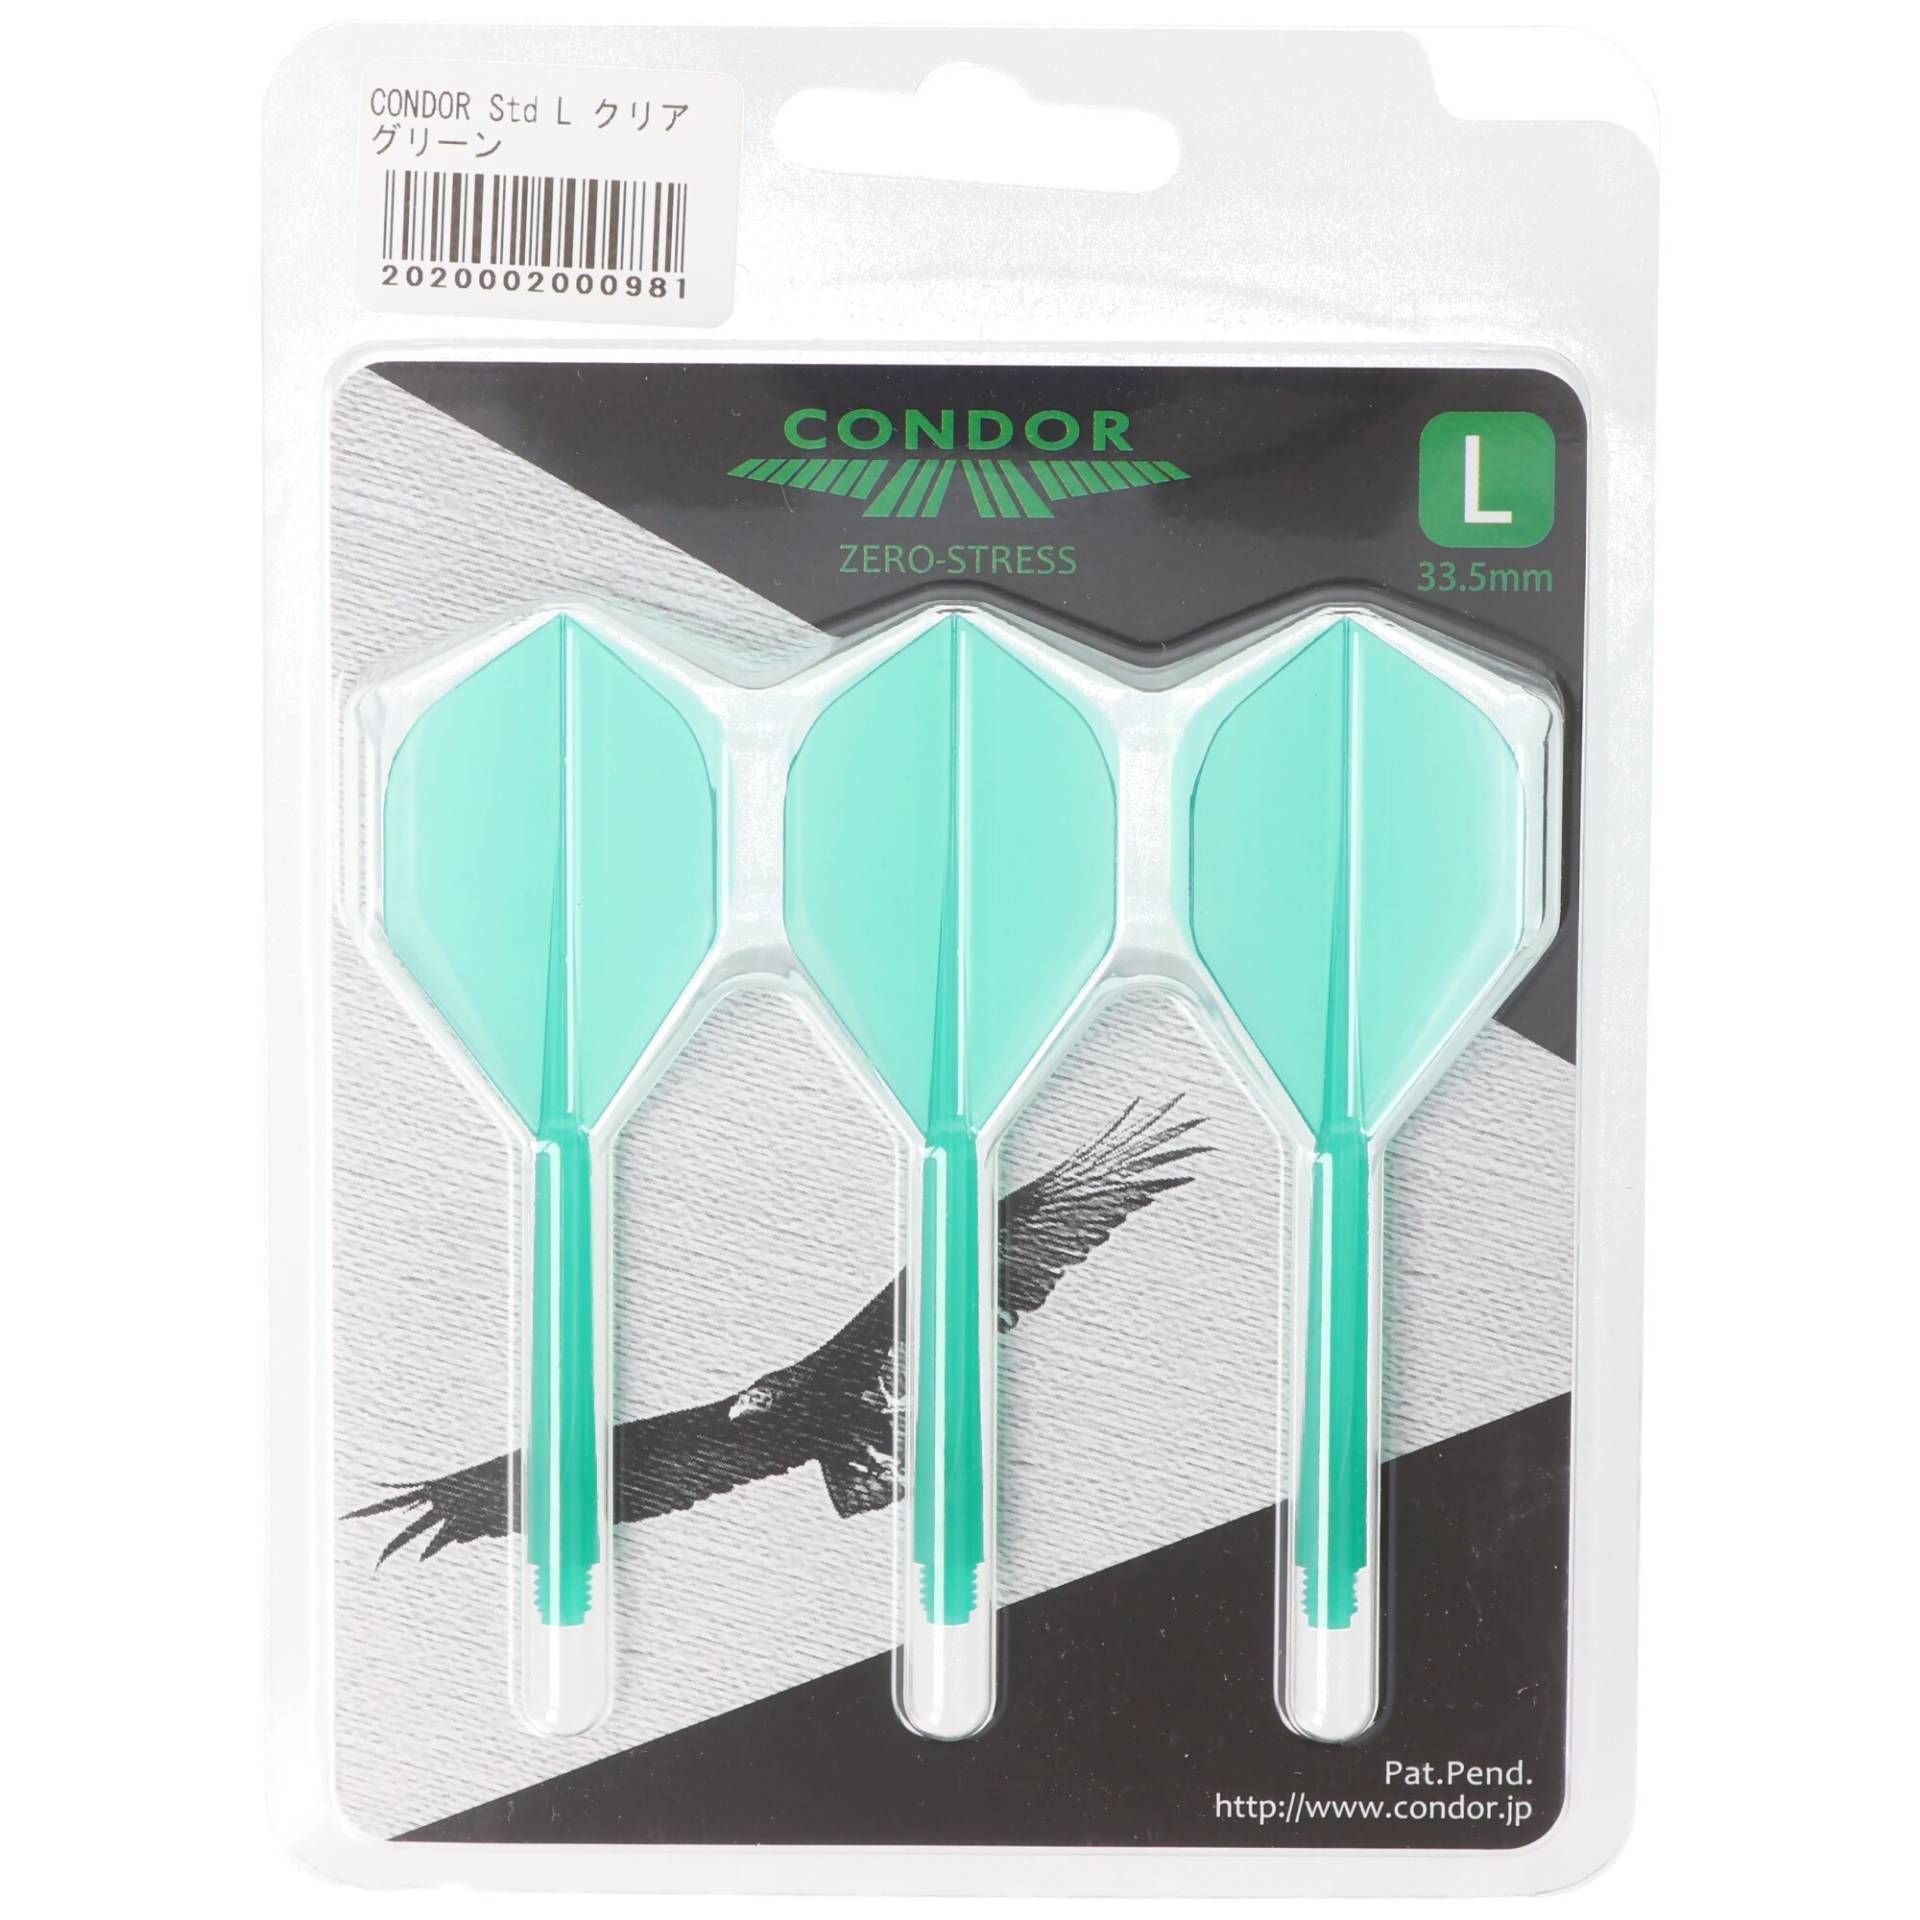 Condor Dartflight Zero Stress Standard L, Gr. L, grün transparent, 33,5mm, 3 Stück von Condor